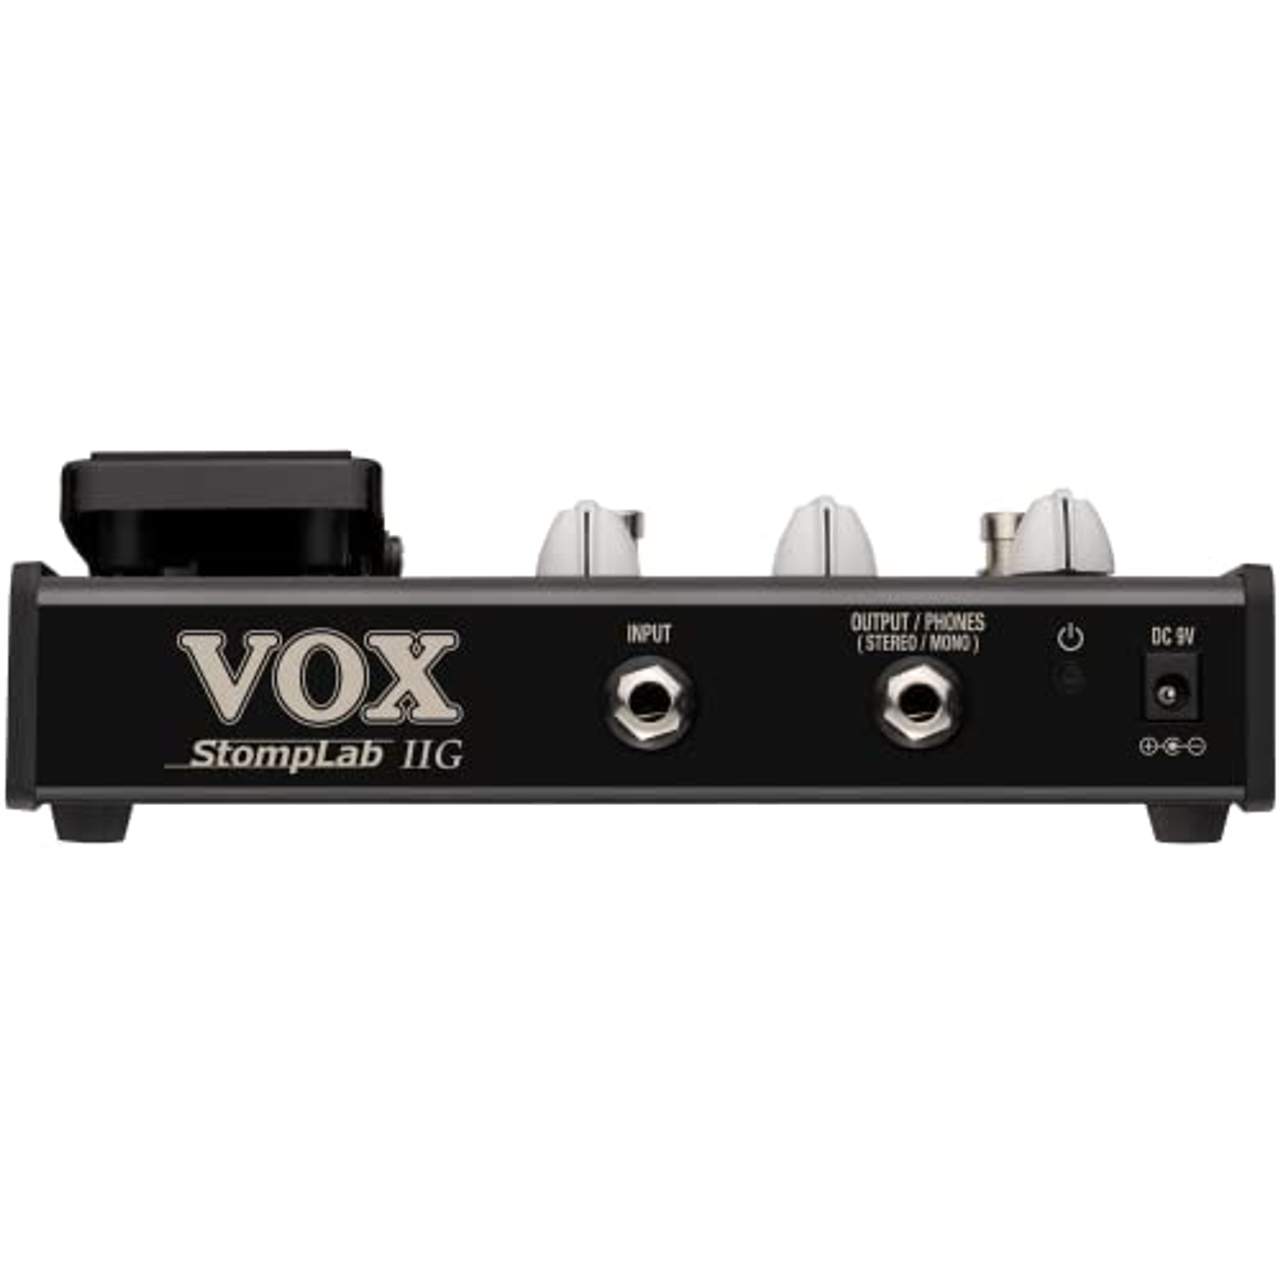 VOX SL2G 2G Amplifier Multi Effect Stomplab Pedal for Guitar